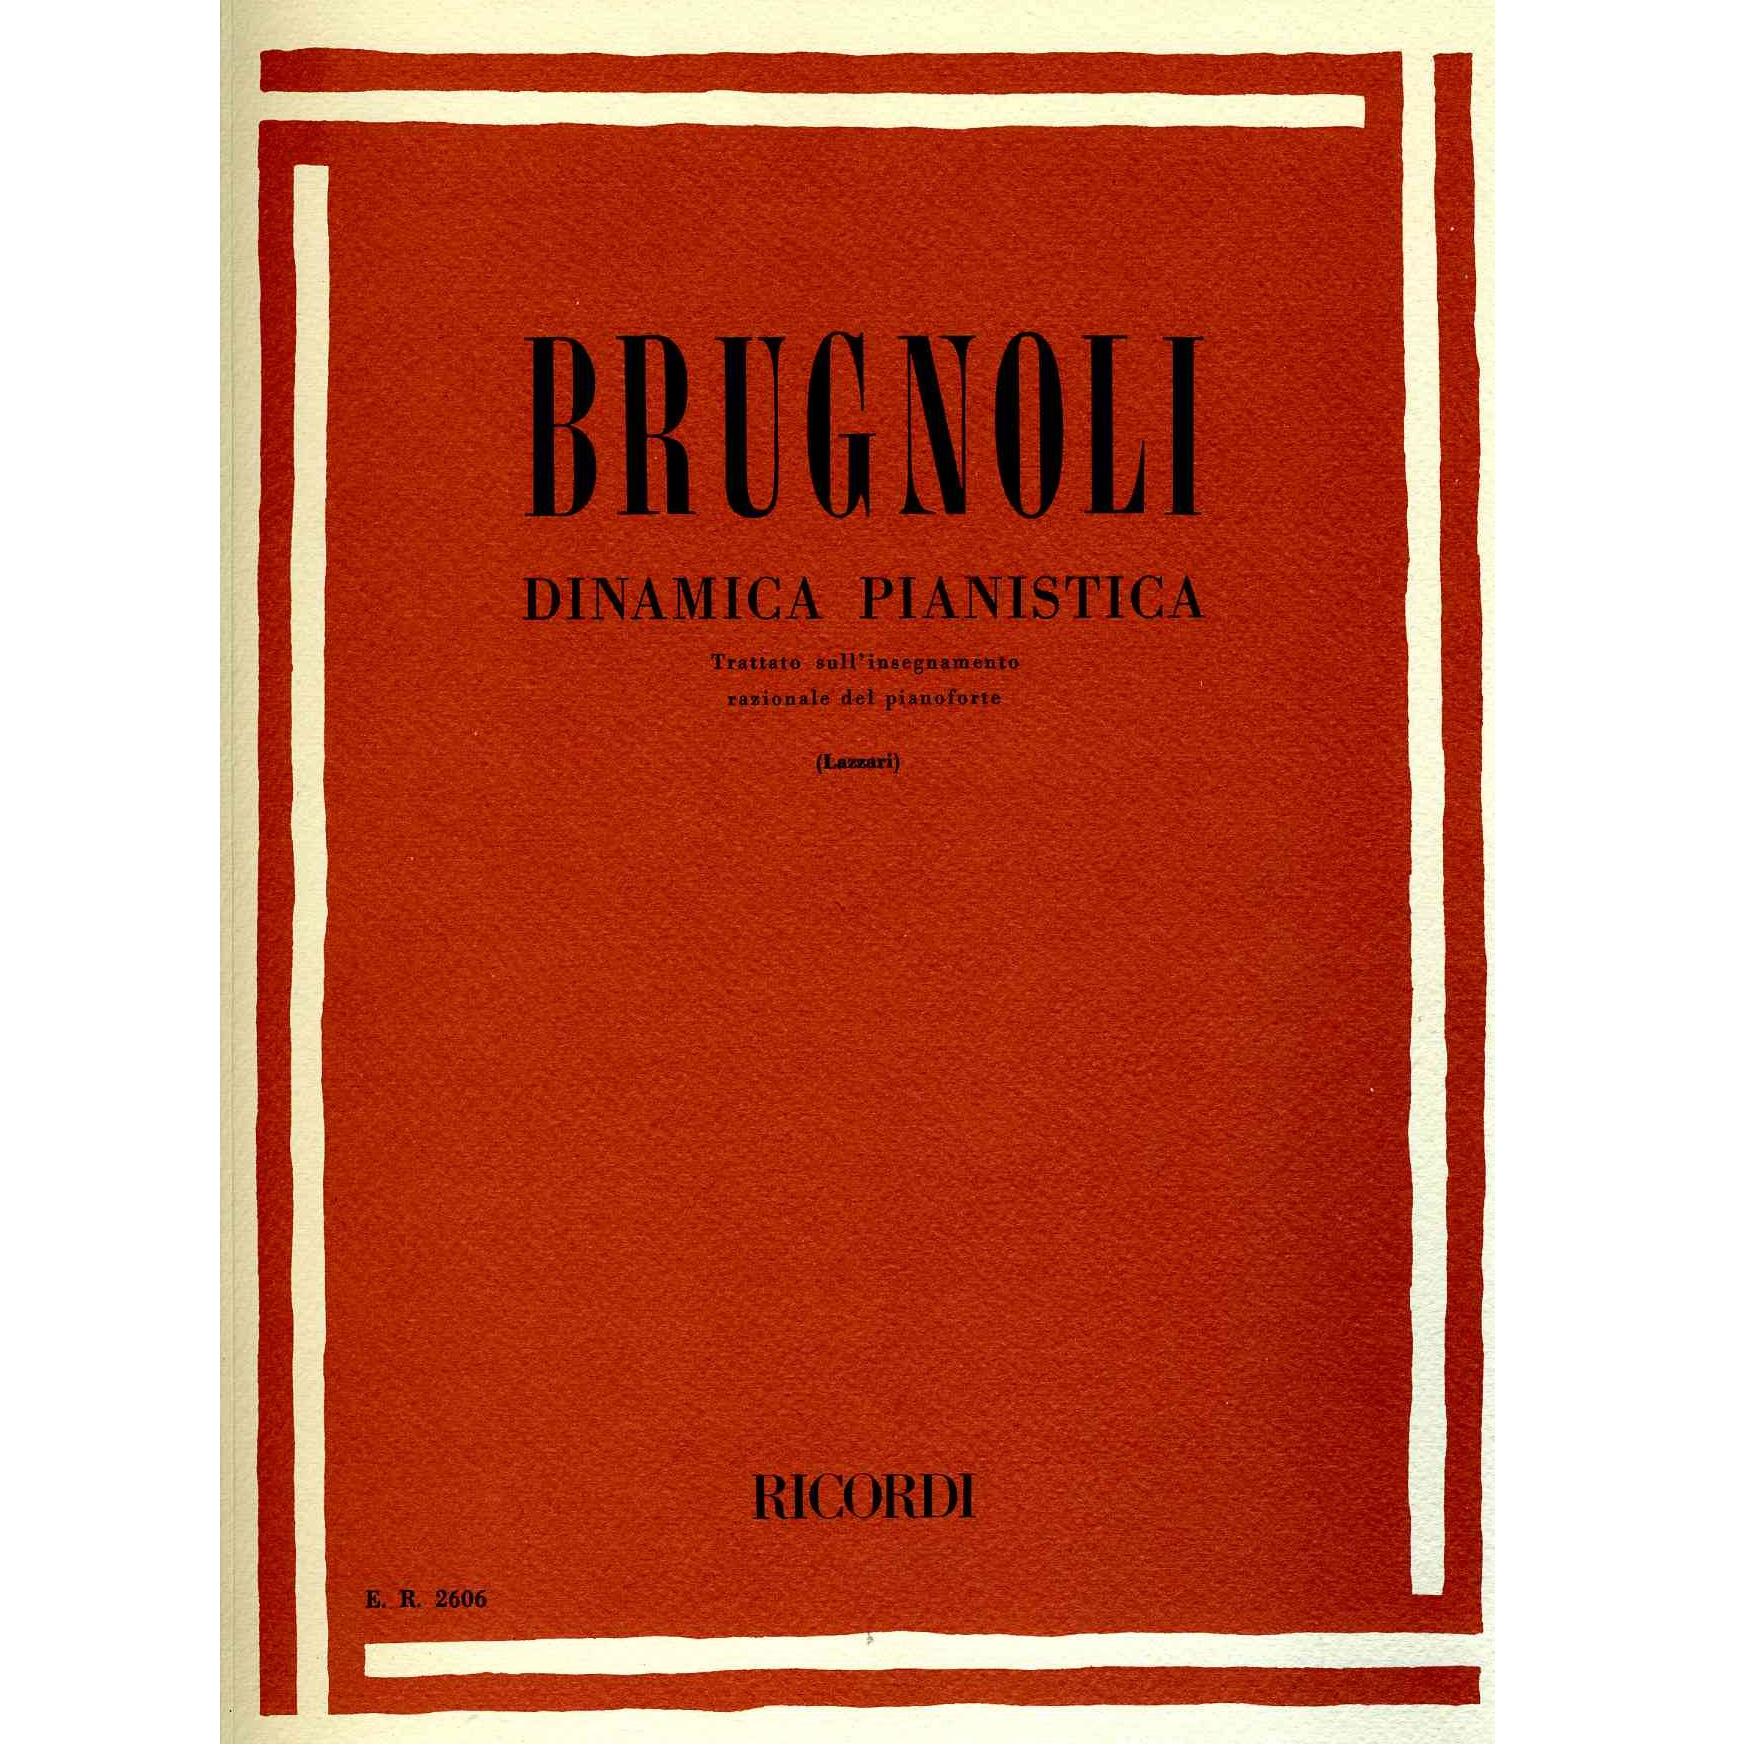 Brugnoli Dinamica Pianistica (Lazzari) - RICORDI